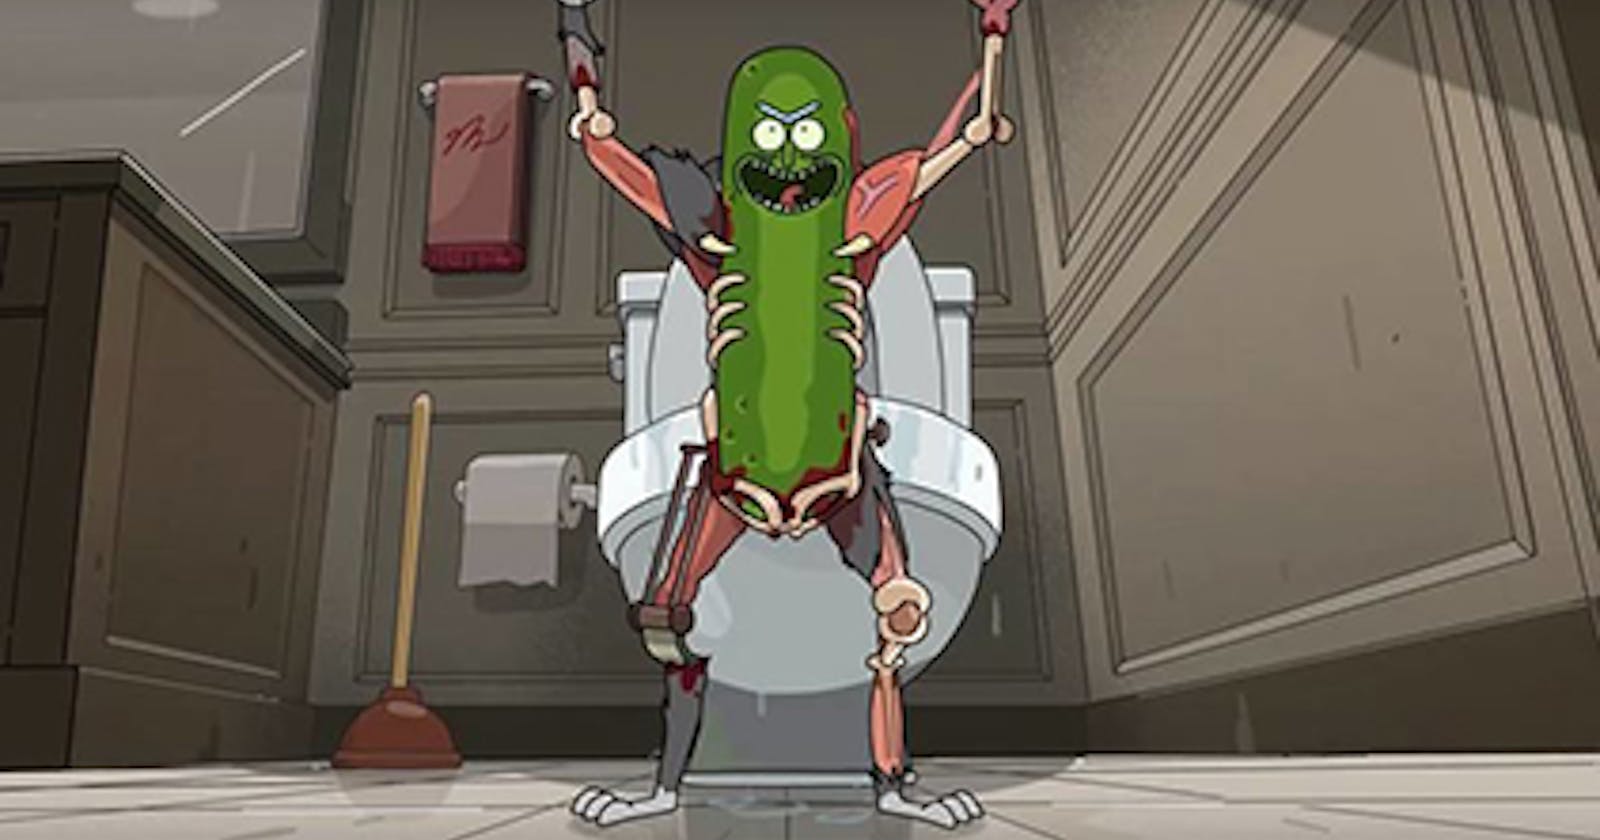 TryHackMe - Pickle Rick